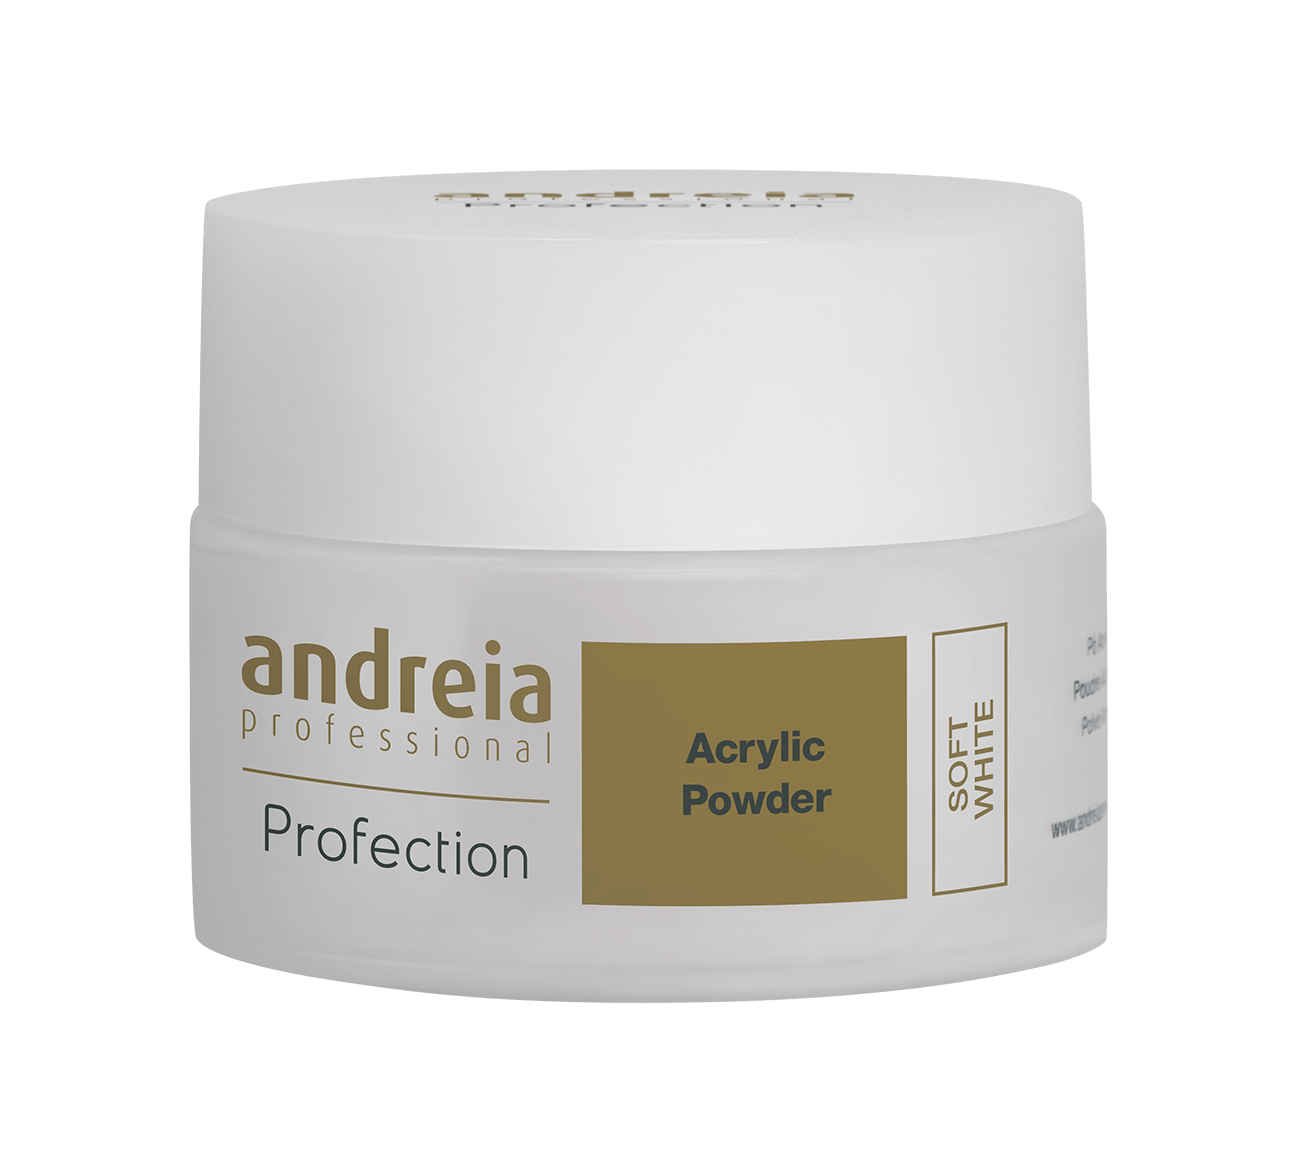 Andreia Professional Profection Acrylic Powder Soft White 35g